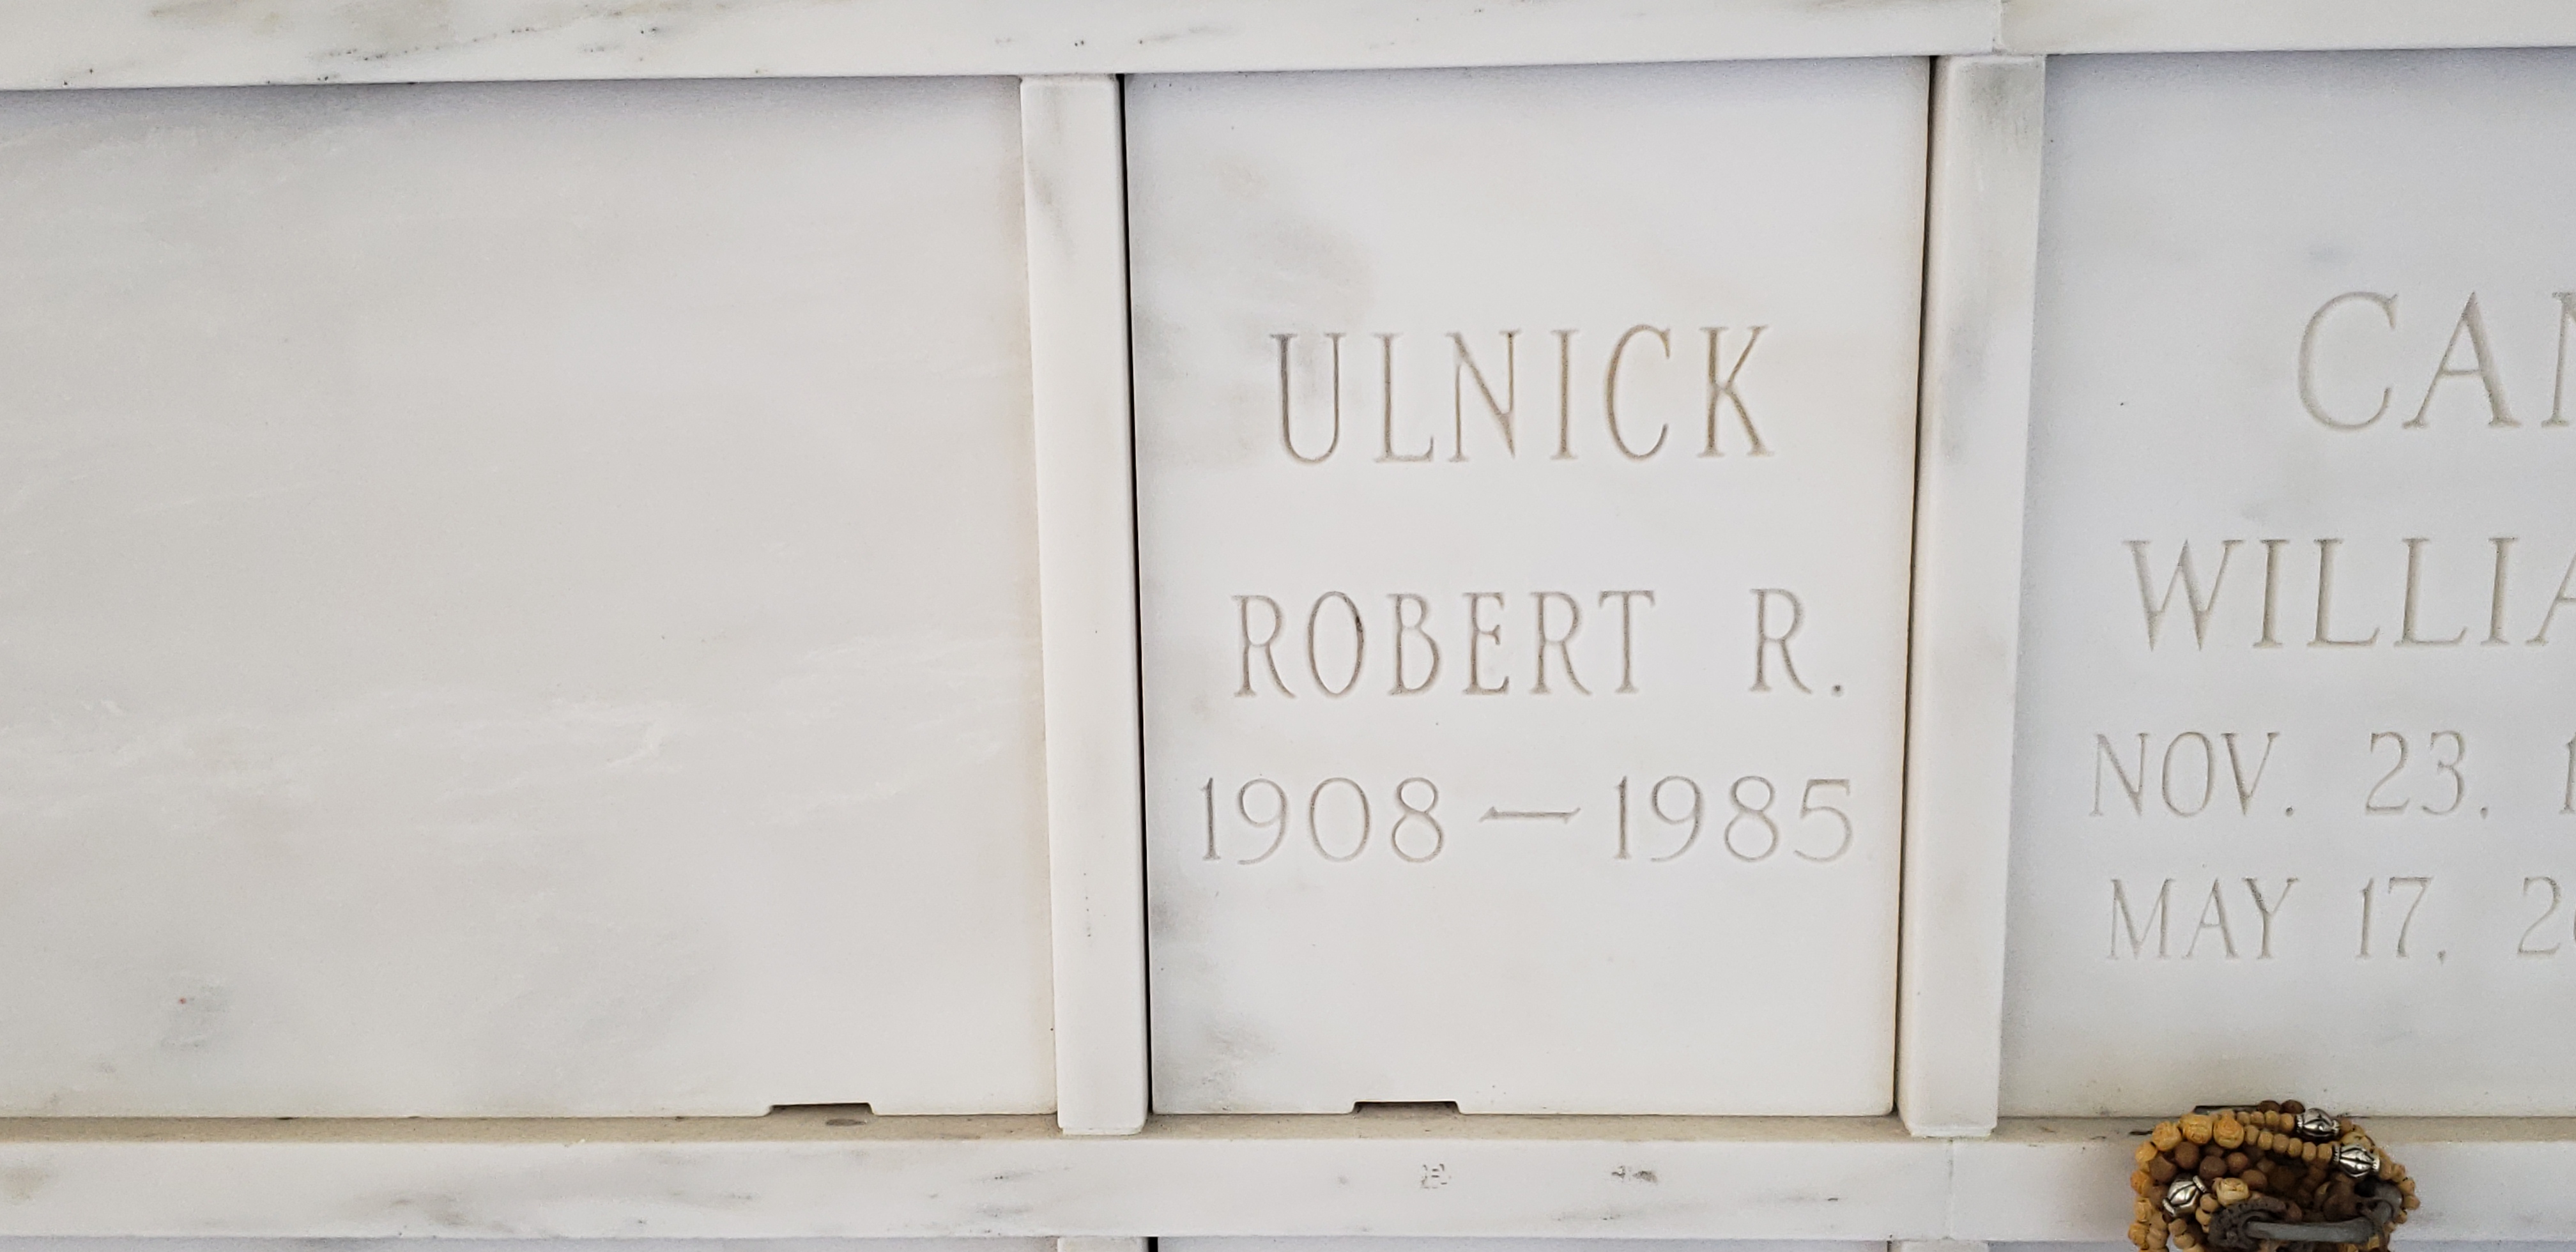 Robert R Ulnick